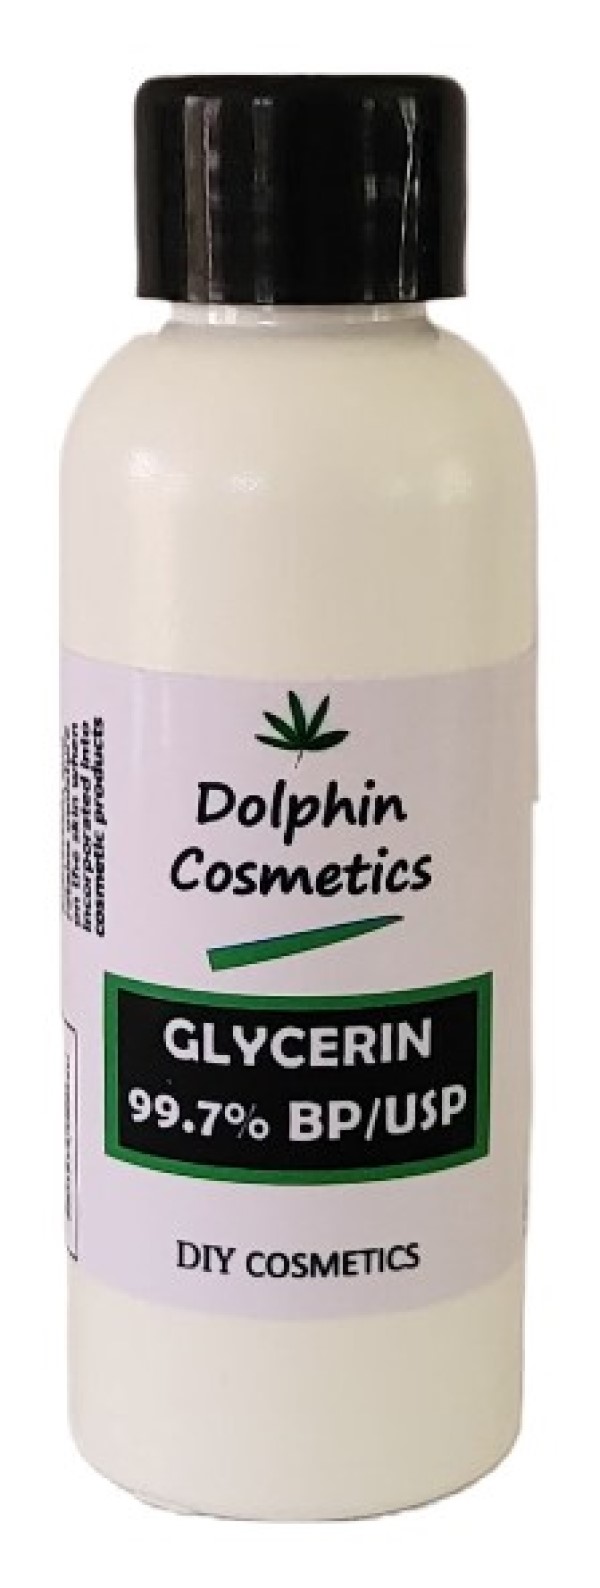 dolphin-cosmetics-glycerin-997-bpusp